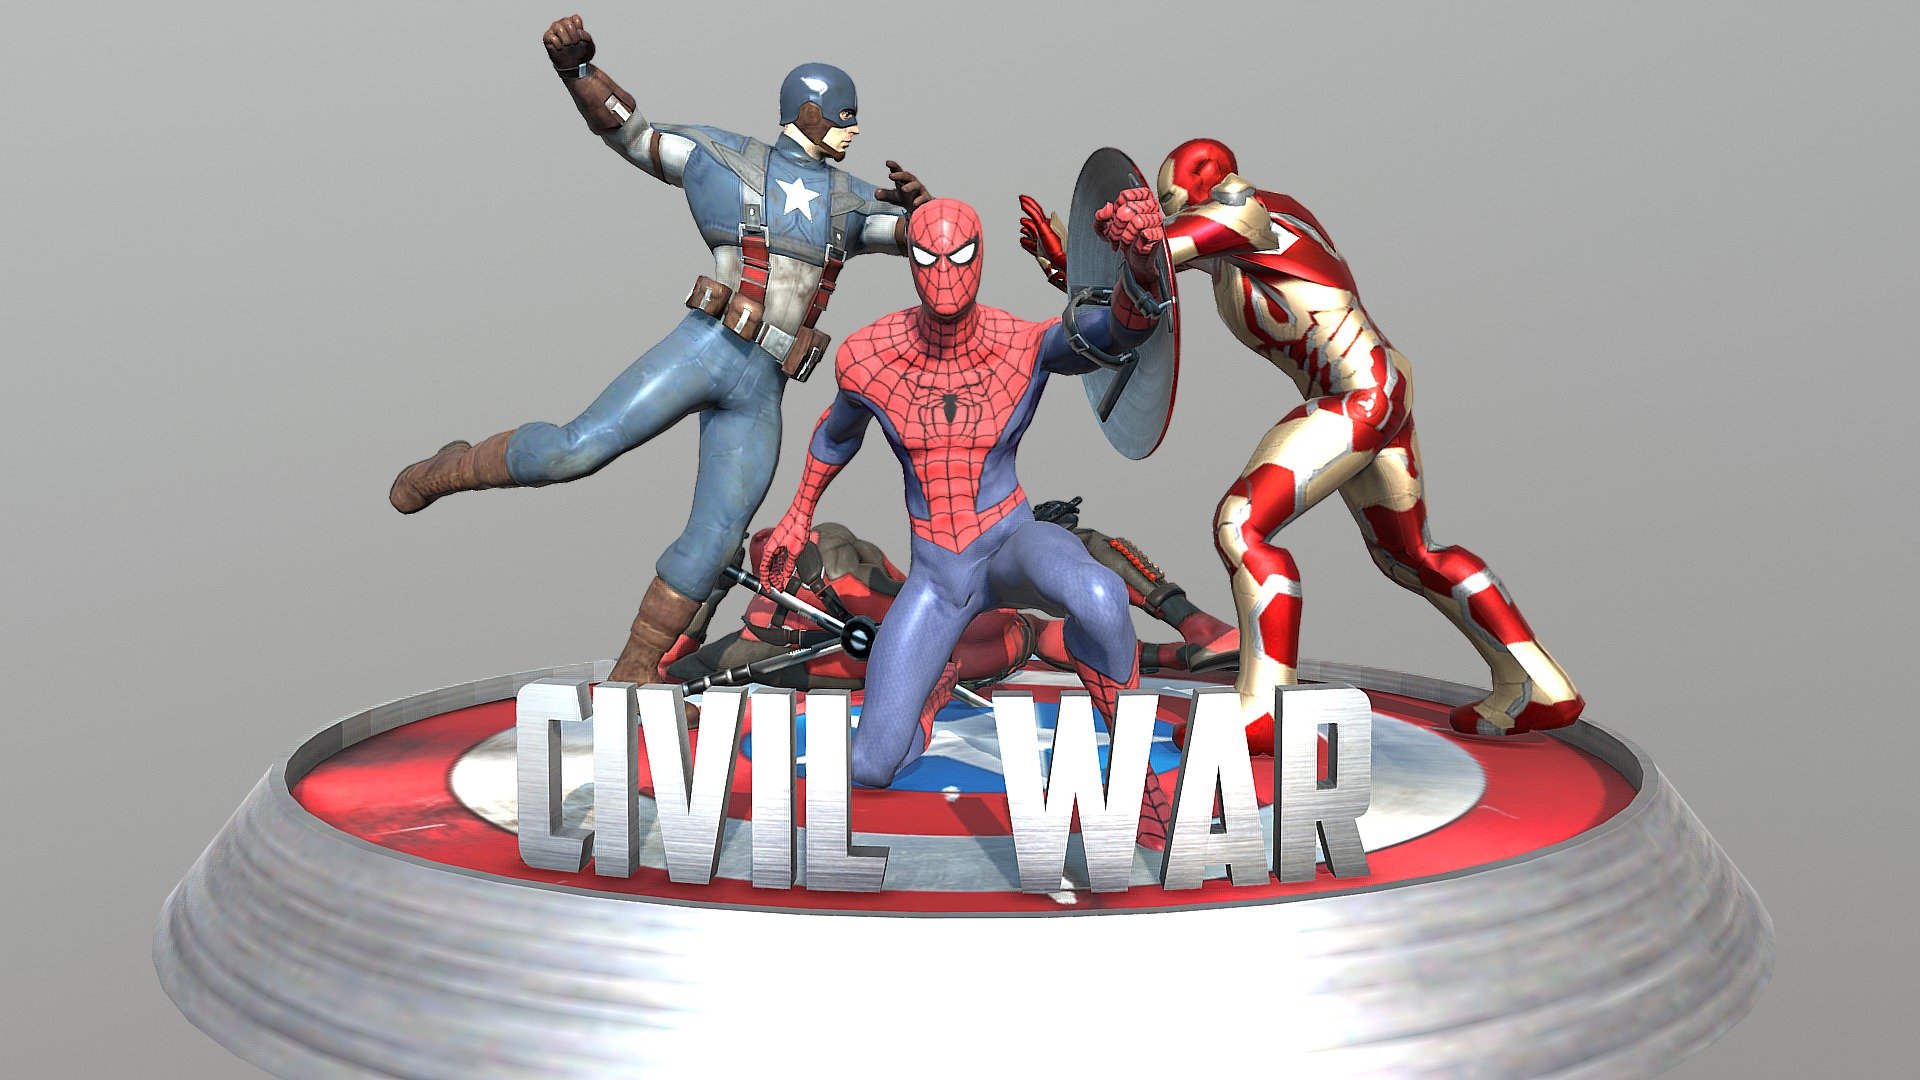 Captain America: Civil War download the last version for windows